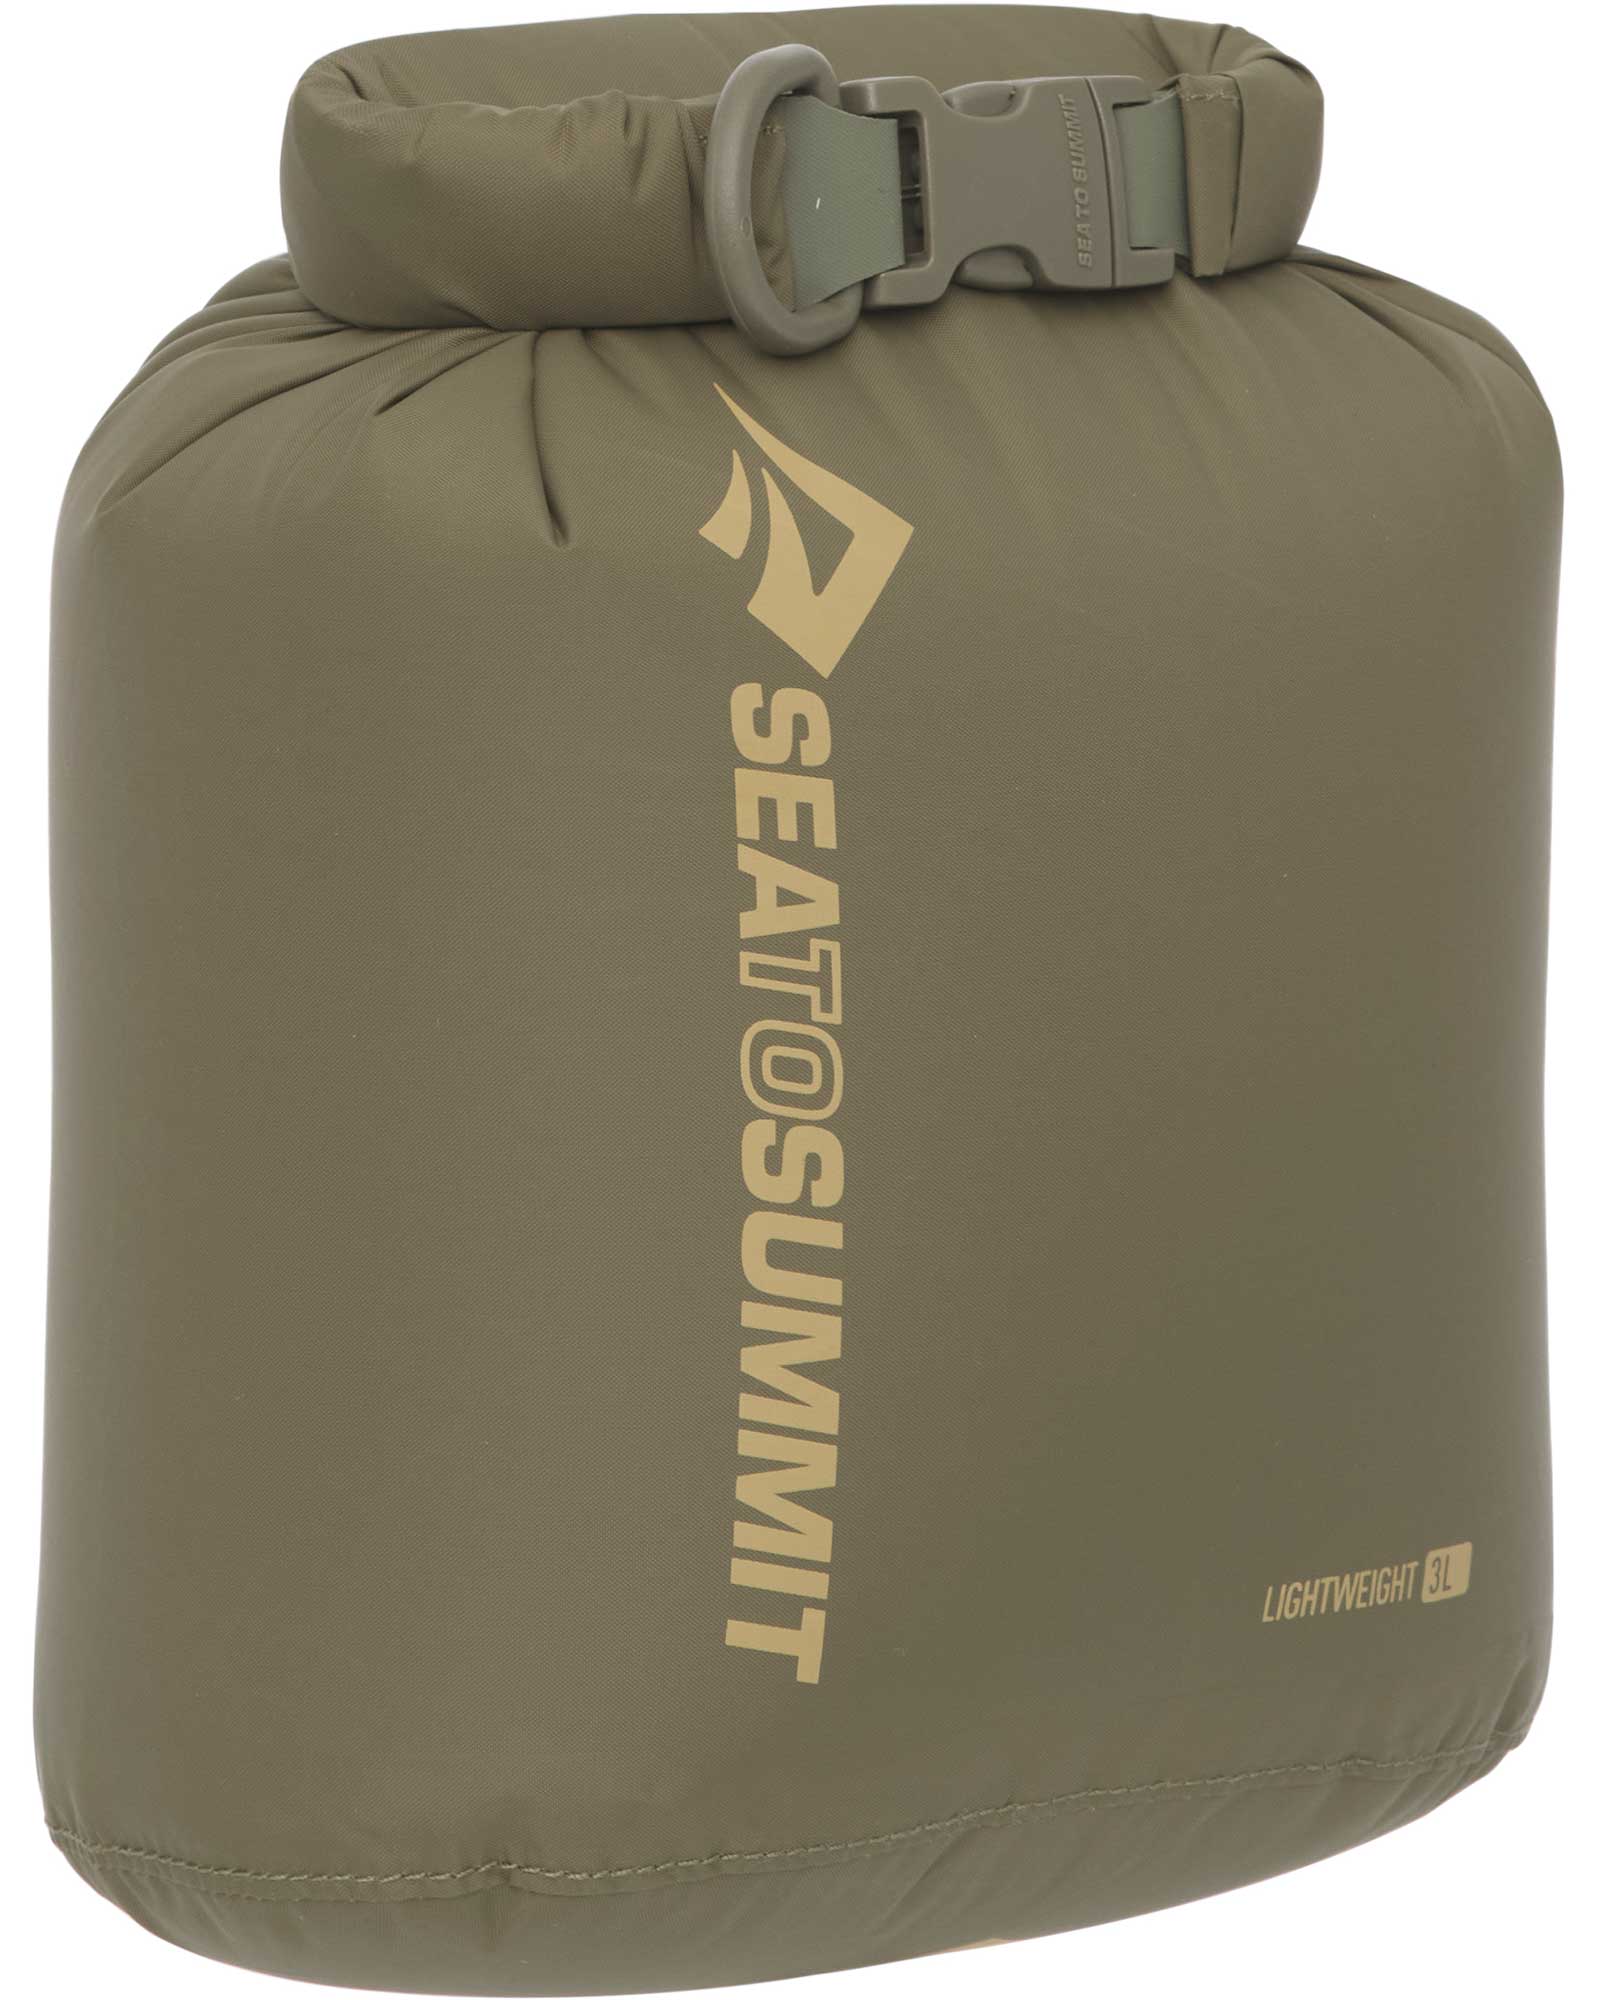 Sea to Summit Lightweight 3L Dry Bag - Burnt Olive